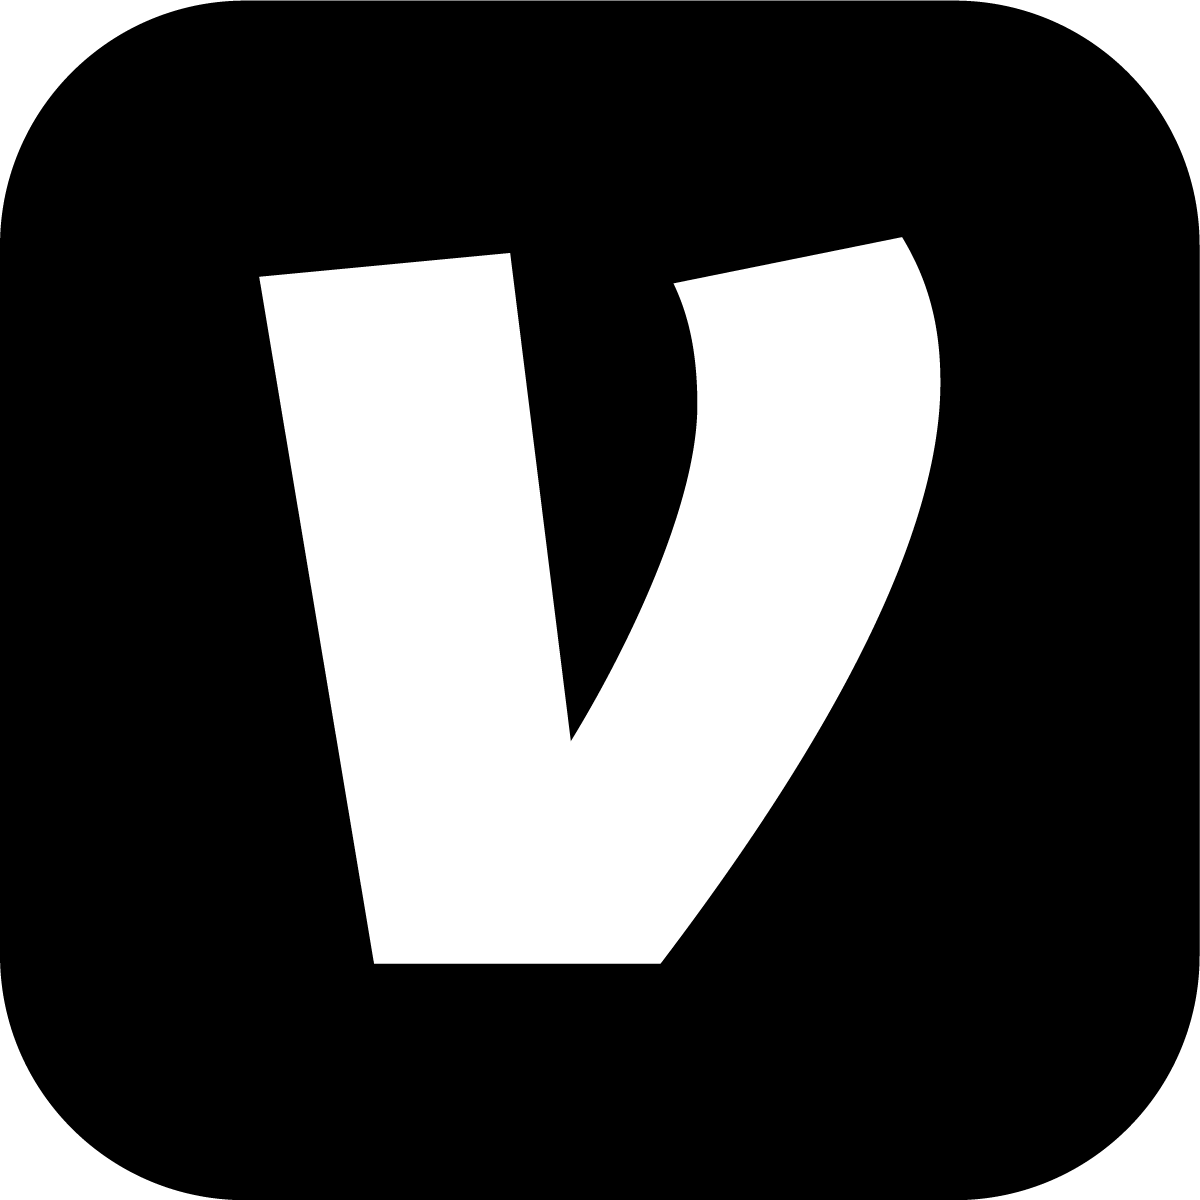 venmo logo black and white